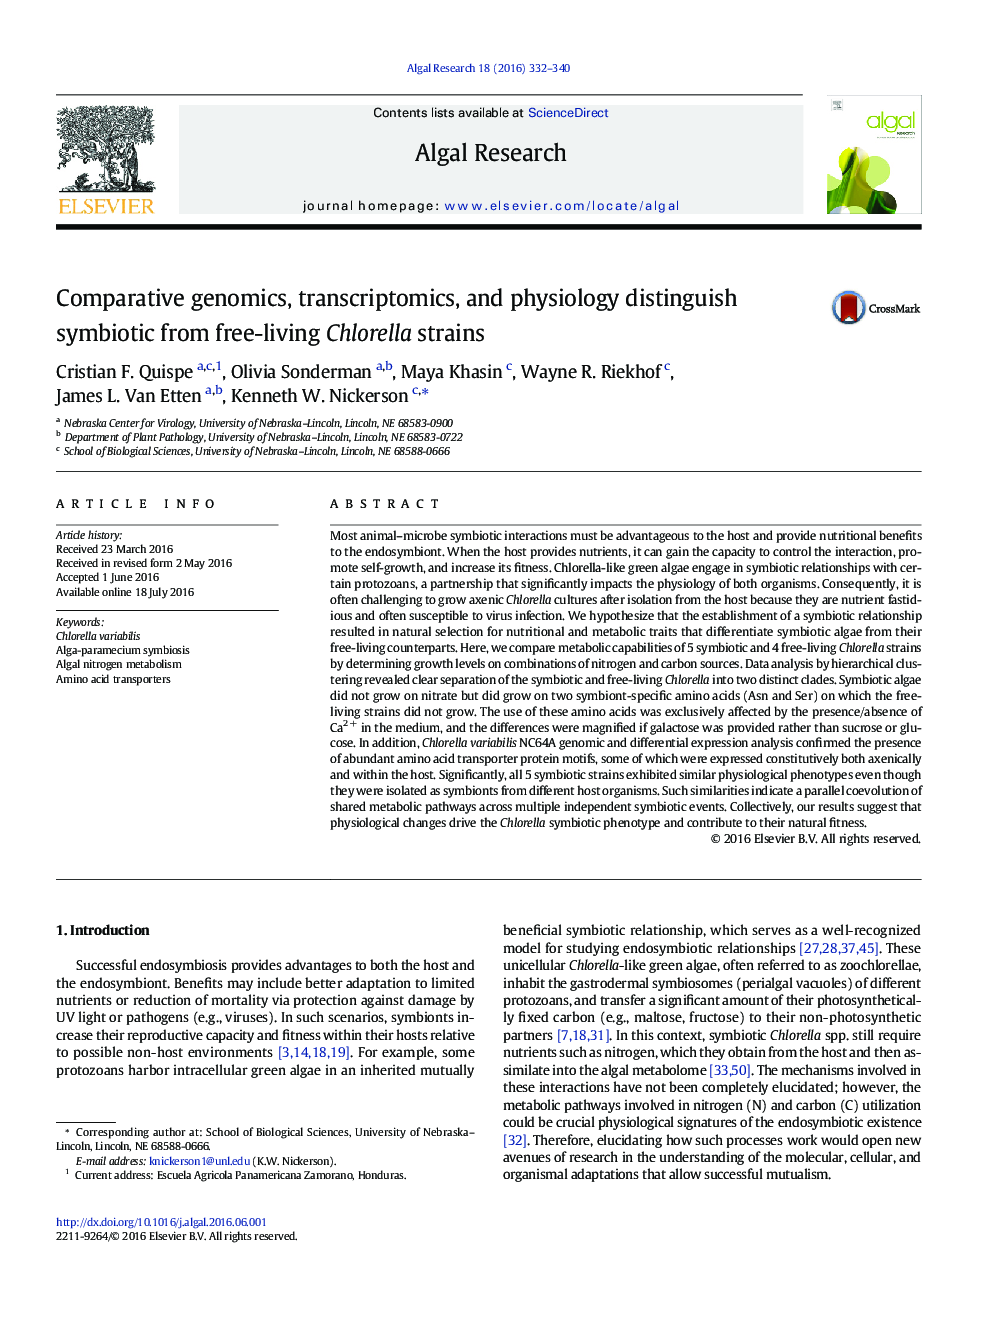 Comparative genomics, transcriptomics, and physiology distinguish symbiotic from free-living Chlorella strains